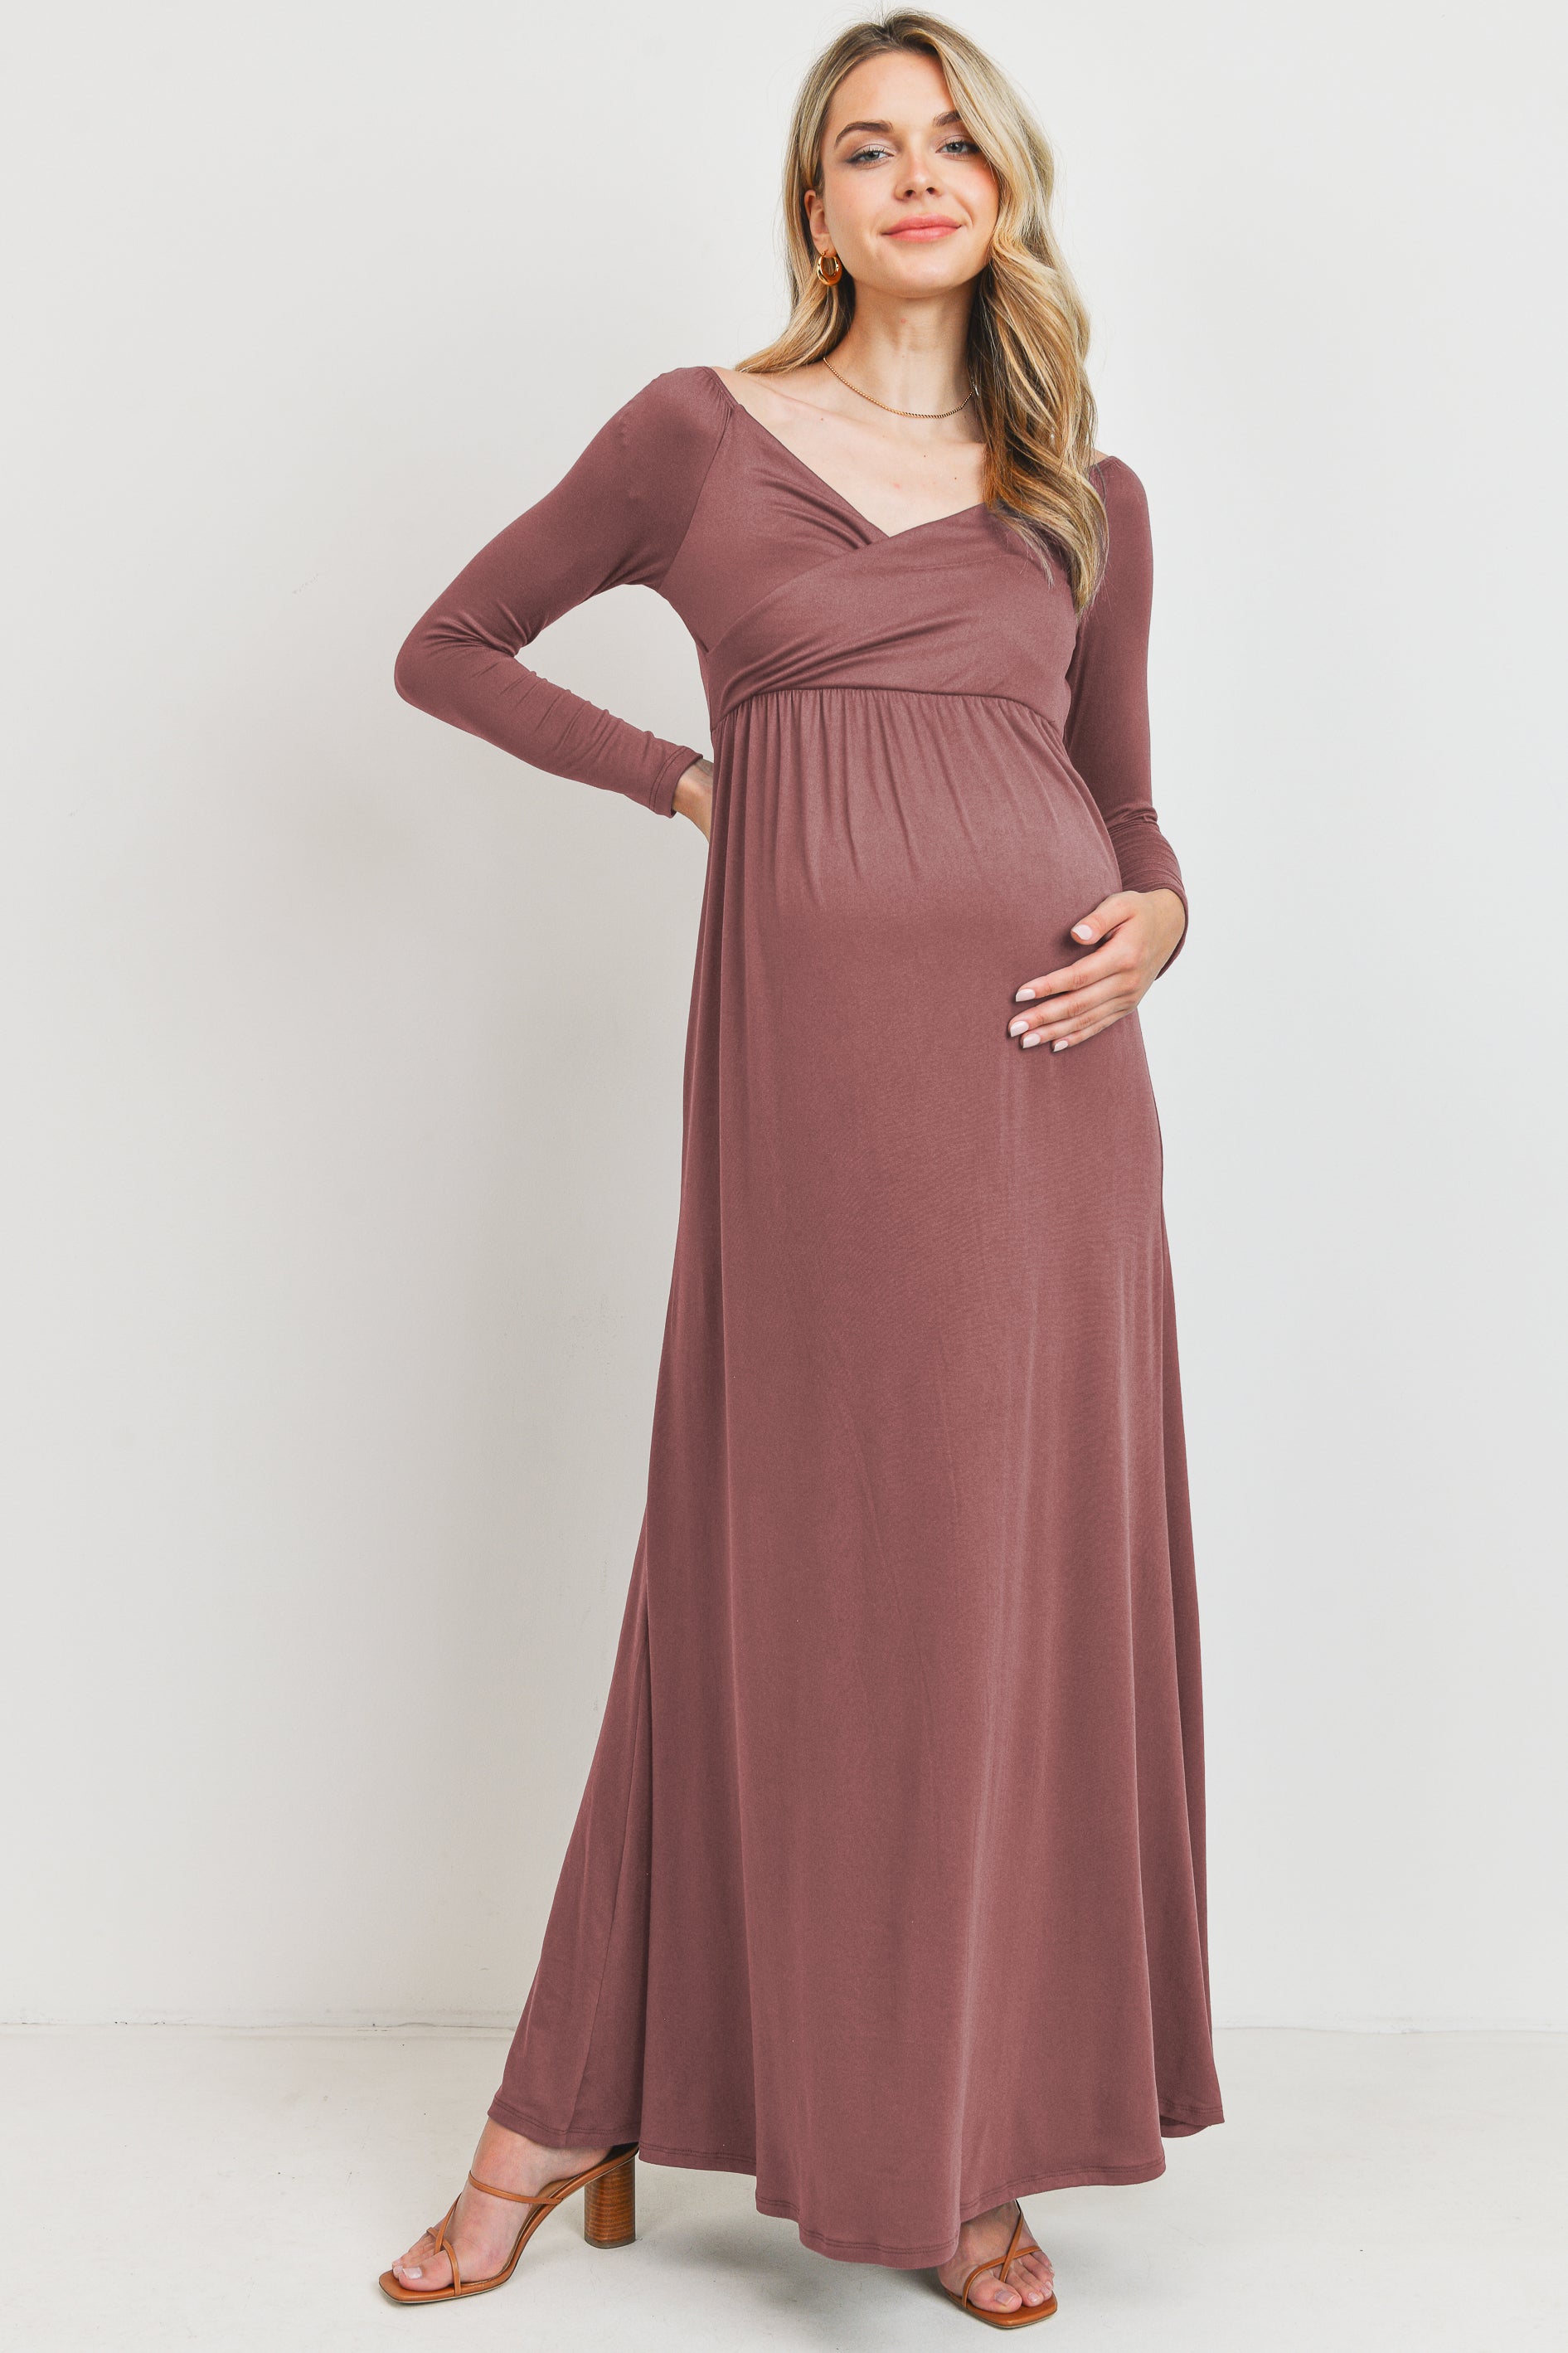 PinkBlush Black Lace Mesh Overlay Maternity Plus Maxi Dress